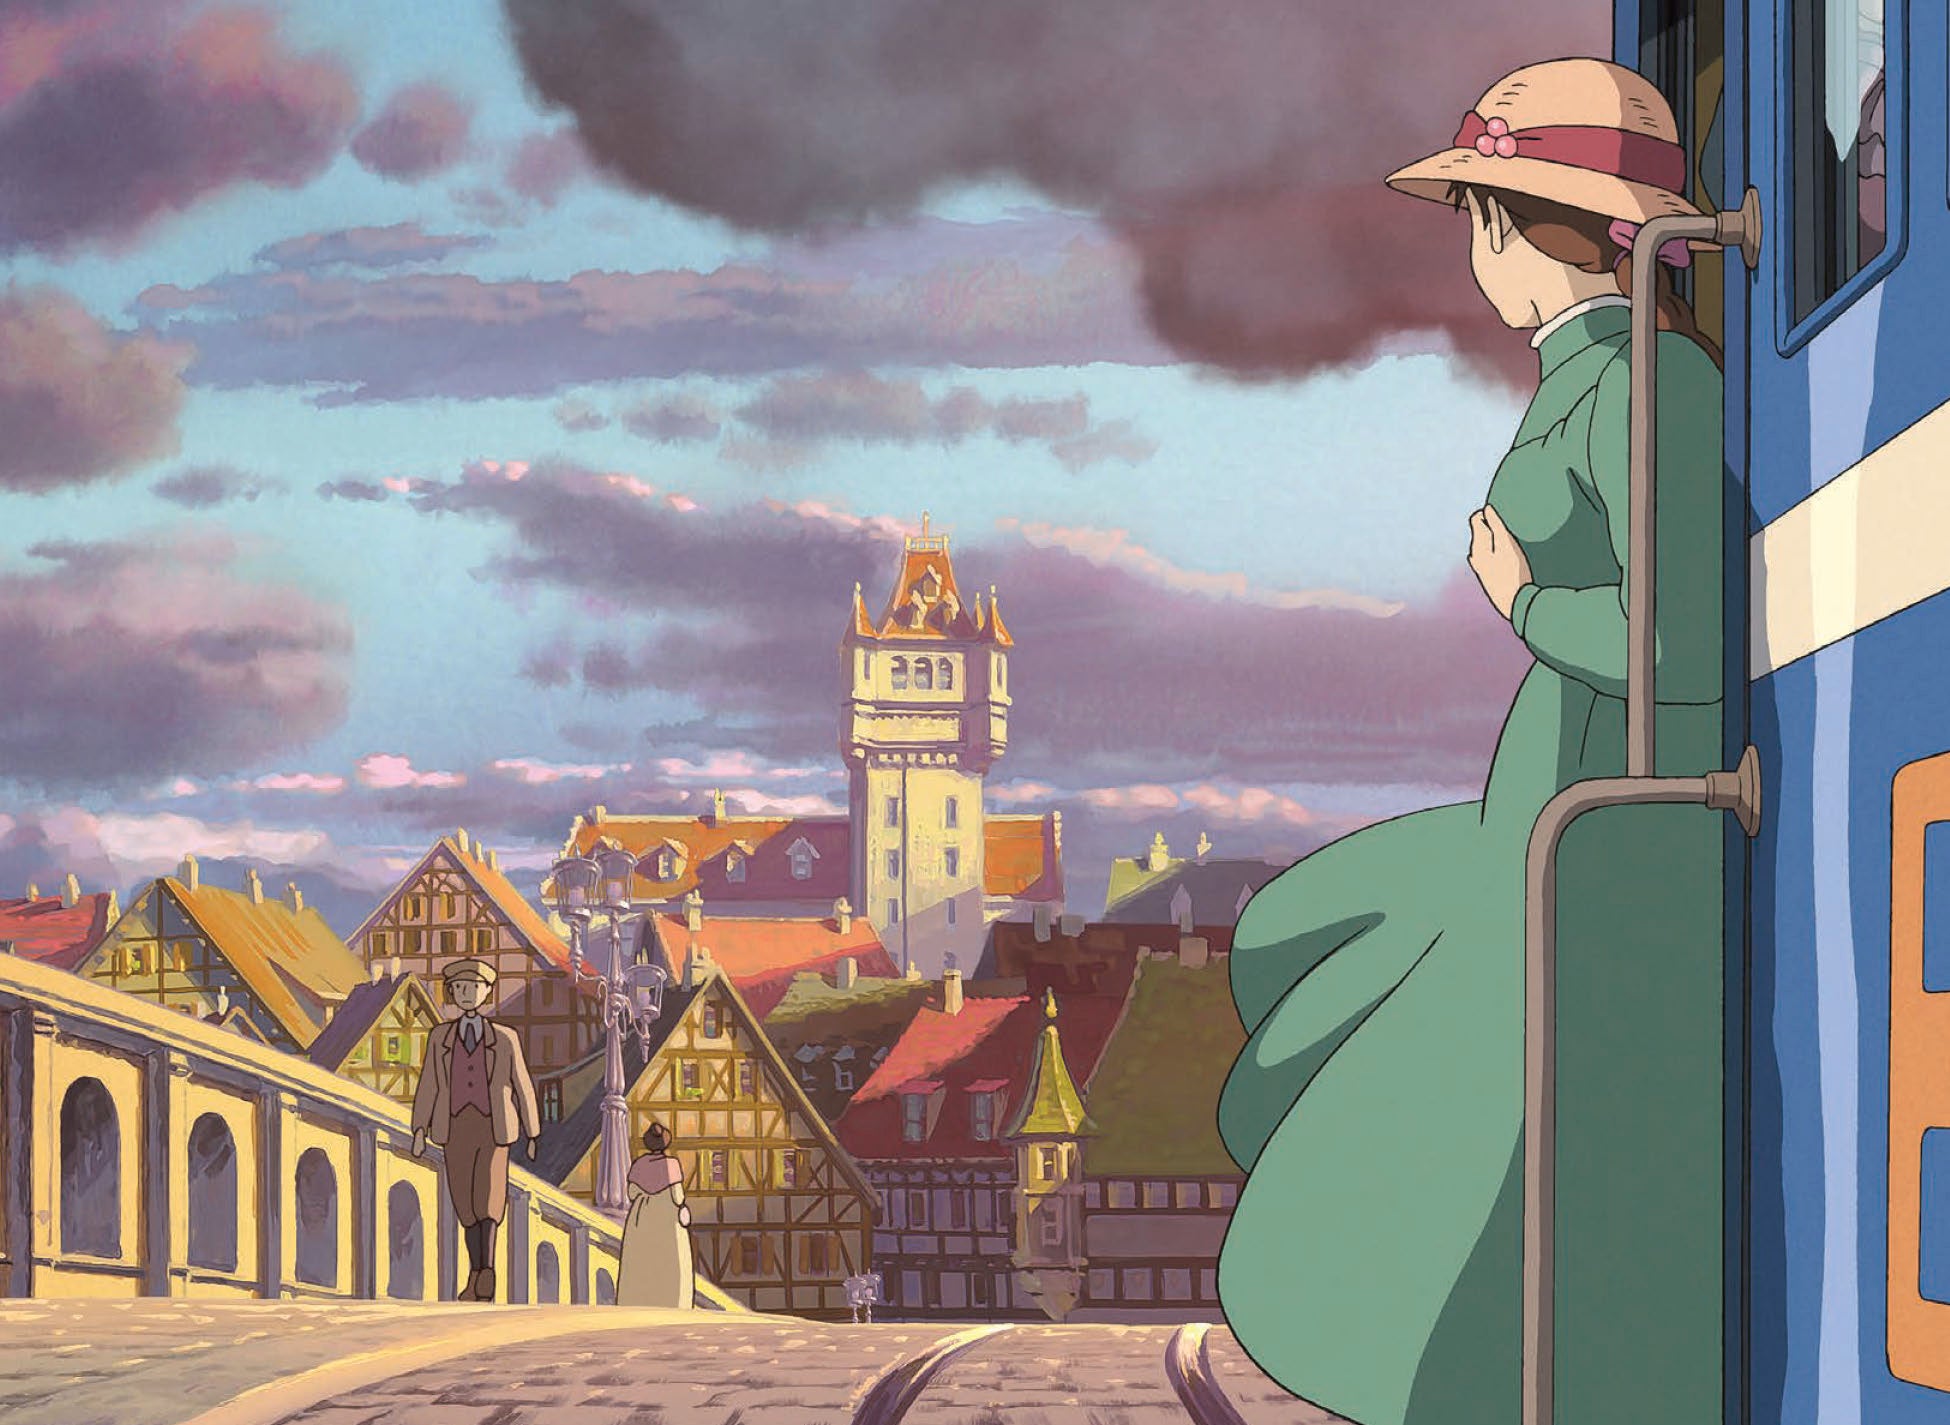 Studio Ghibli Howl's Moving Castle: 30 Postcards